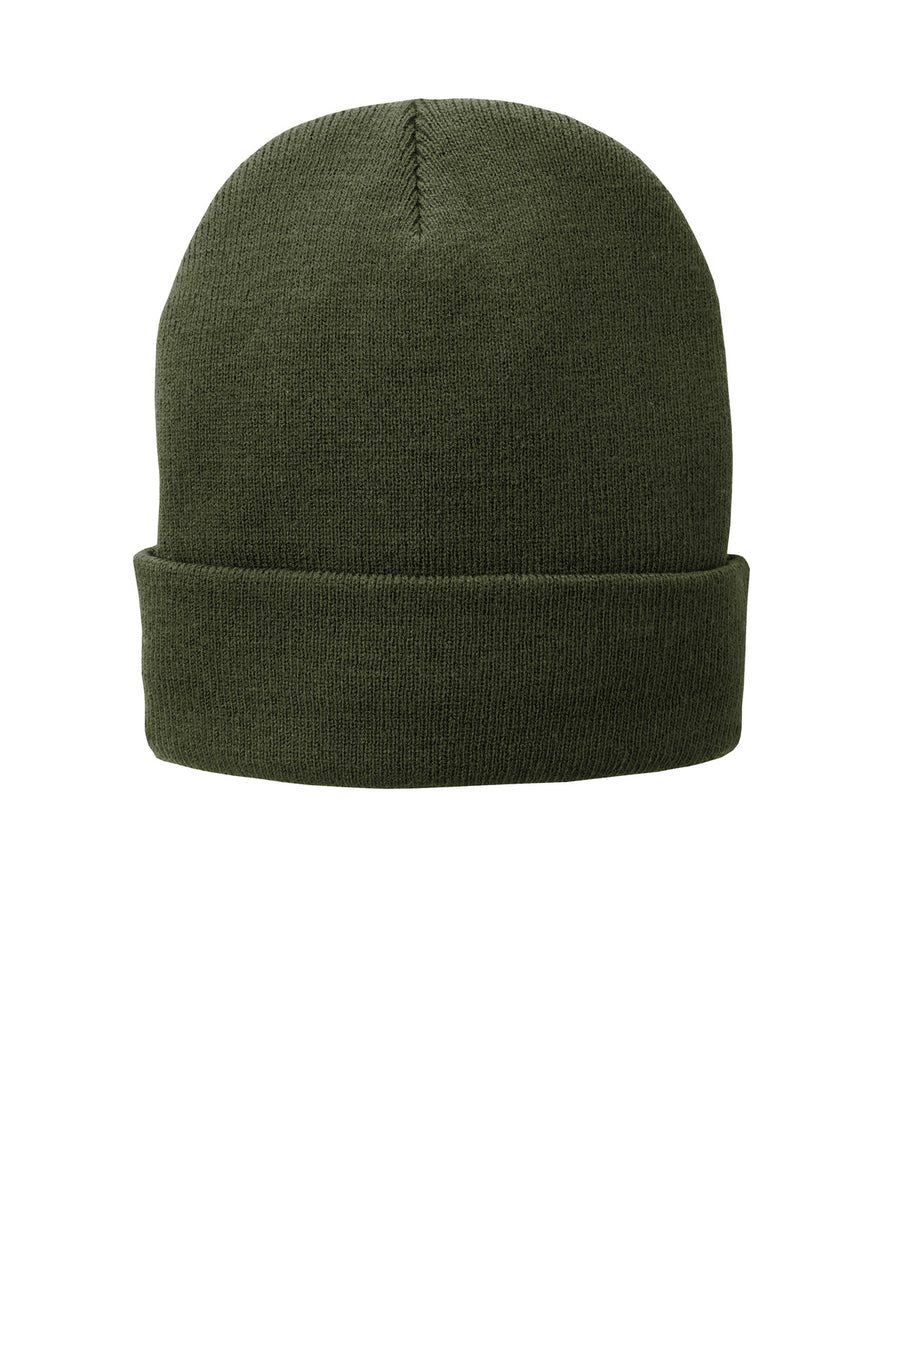 Port & Company Fleece-Lined Knit Cap.